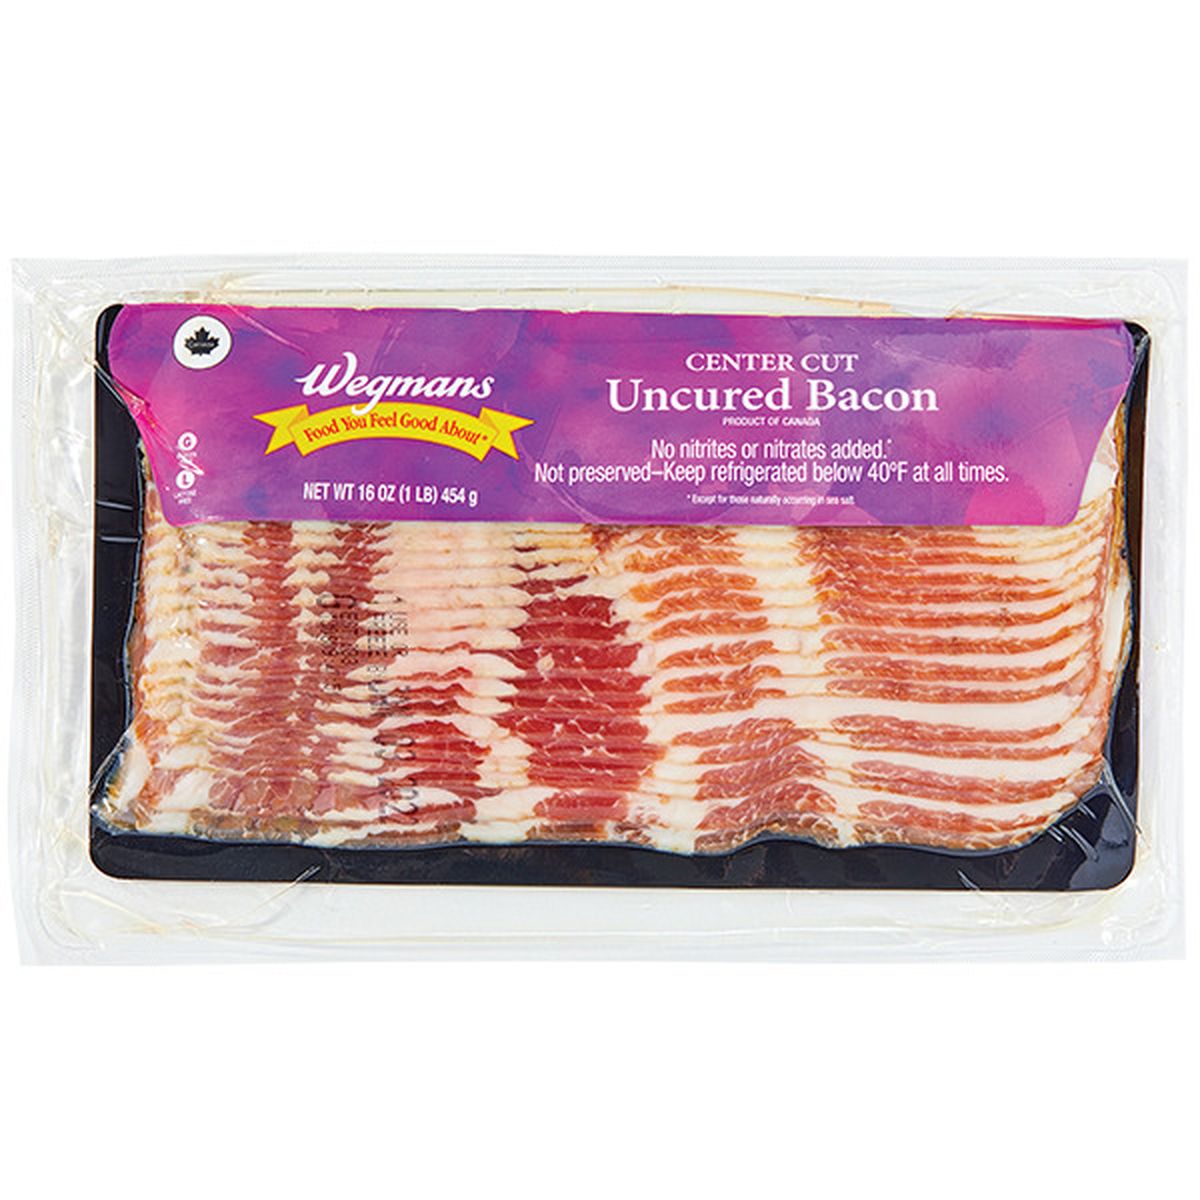 Calories in Wegmans Center Cut Uncured Bacon